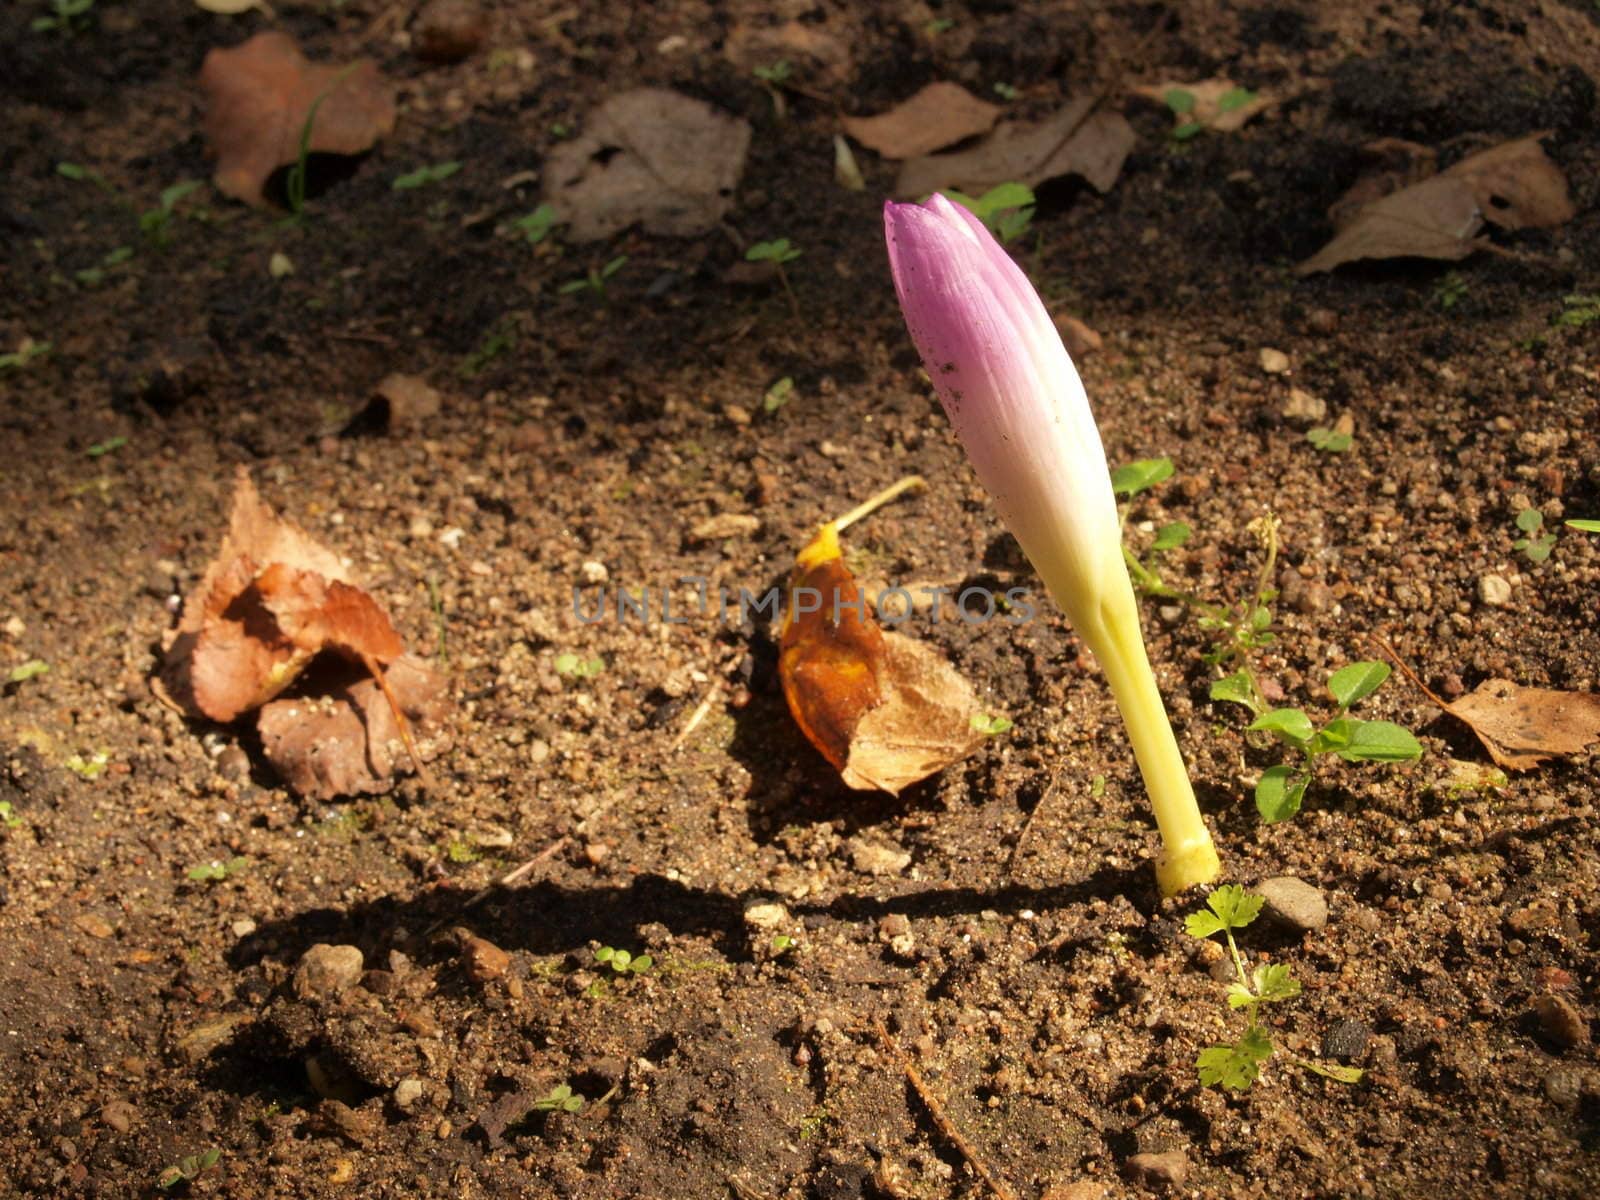 Determined autumn crocus flower sprouting on bare wet soil